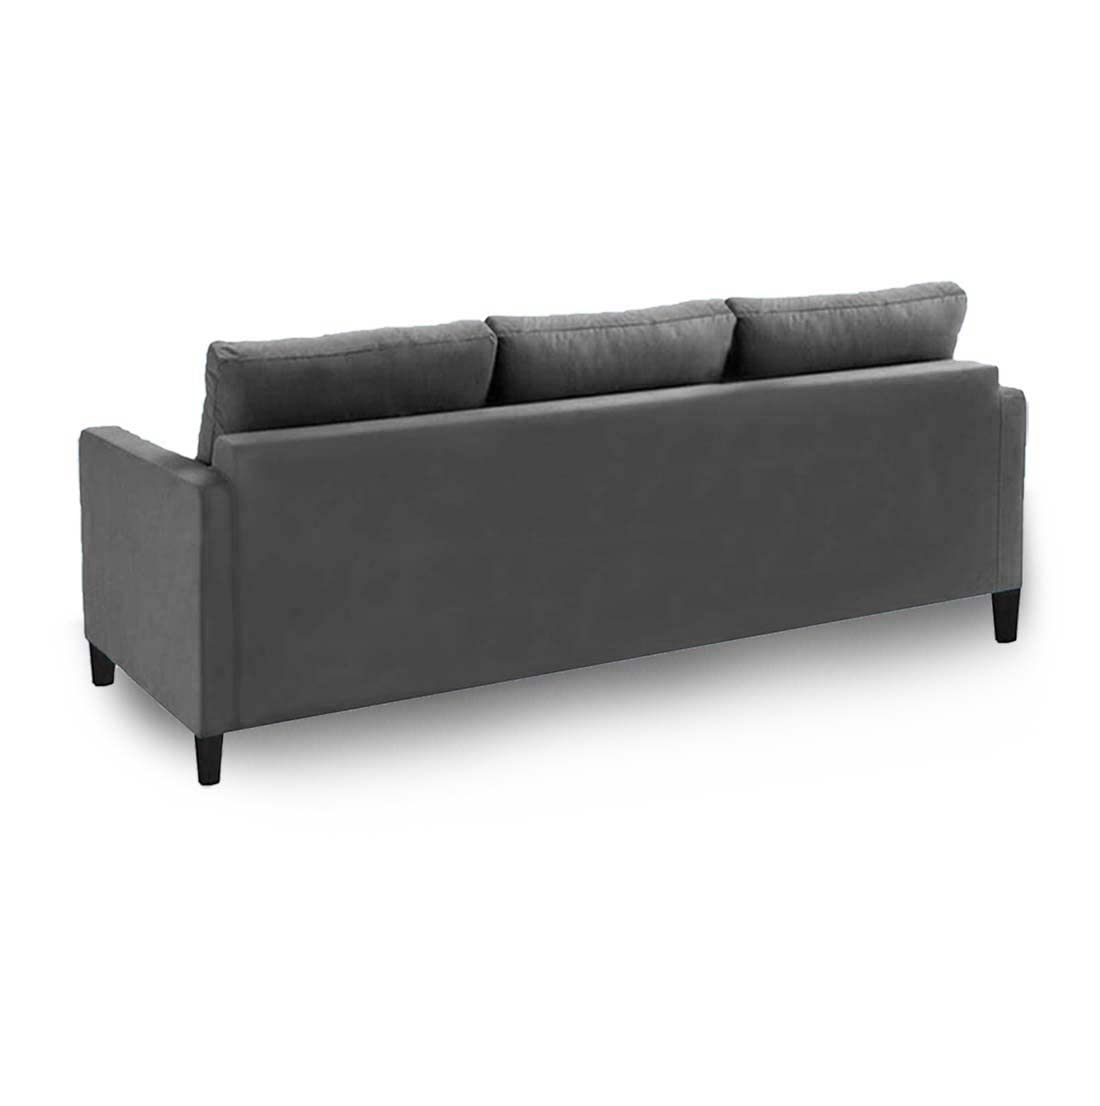 Wishford 2 Seater Fabric Sofa For Living Room - Torque India